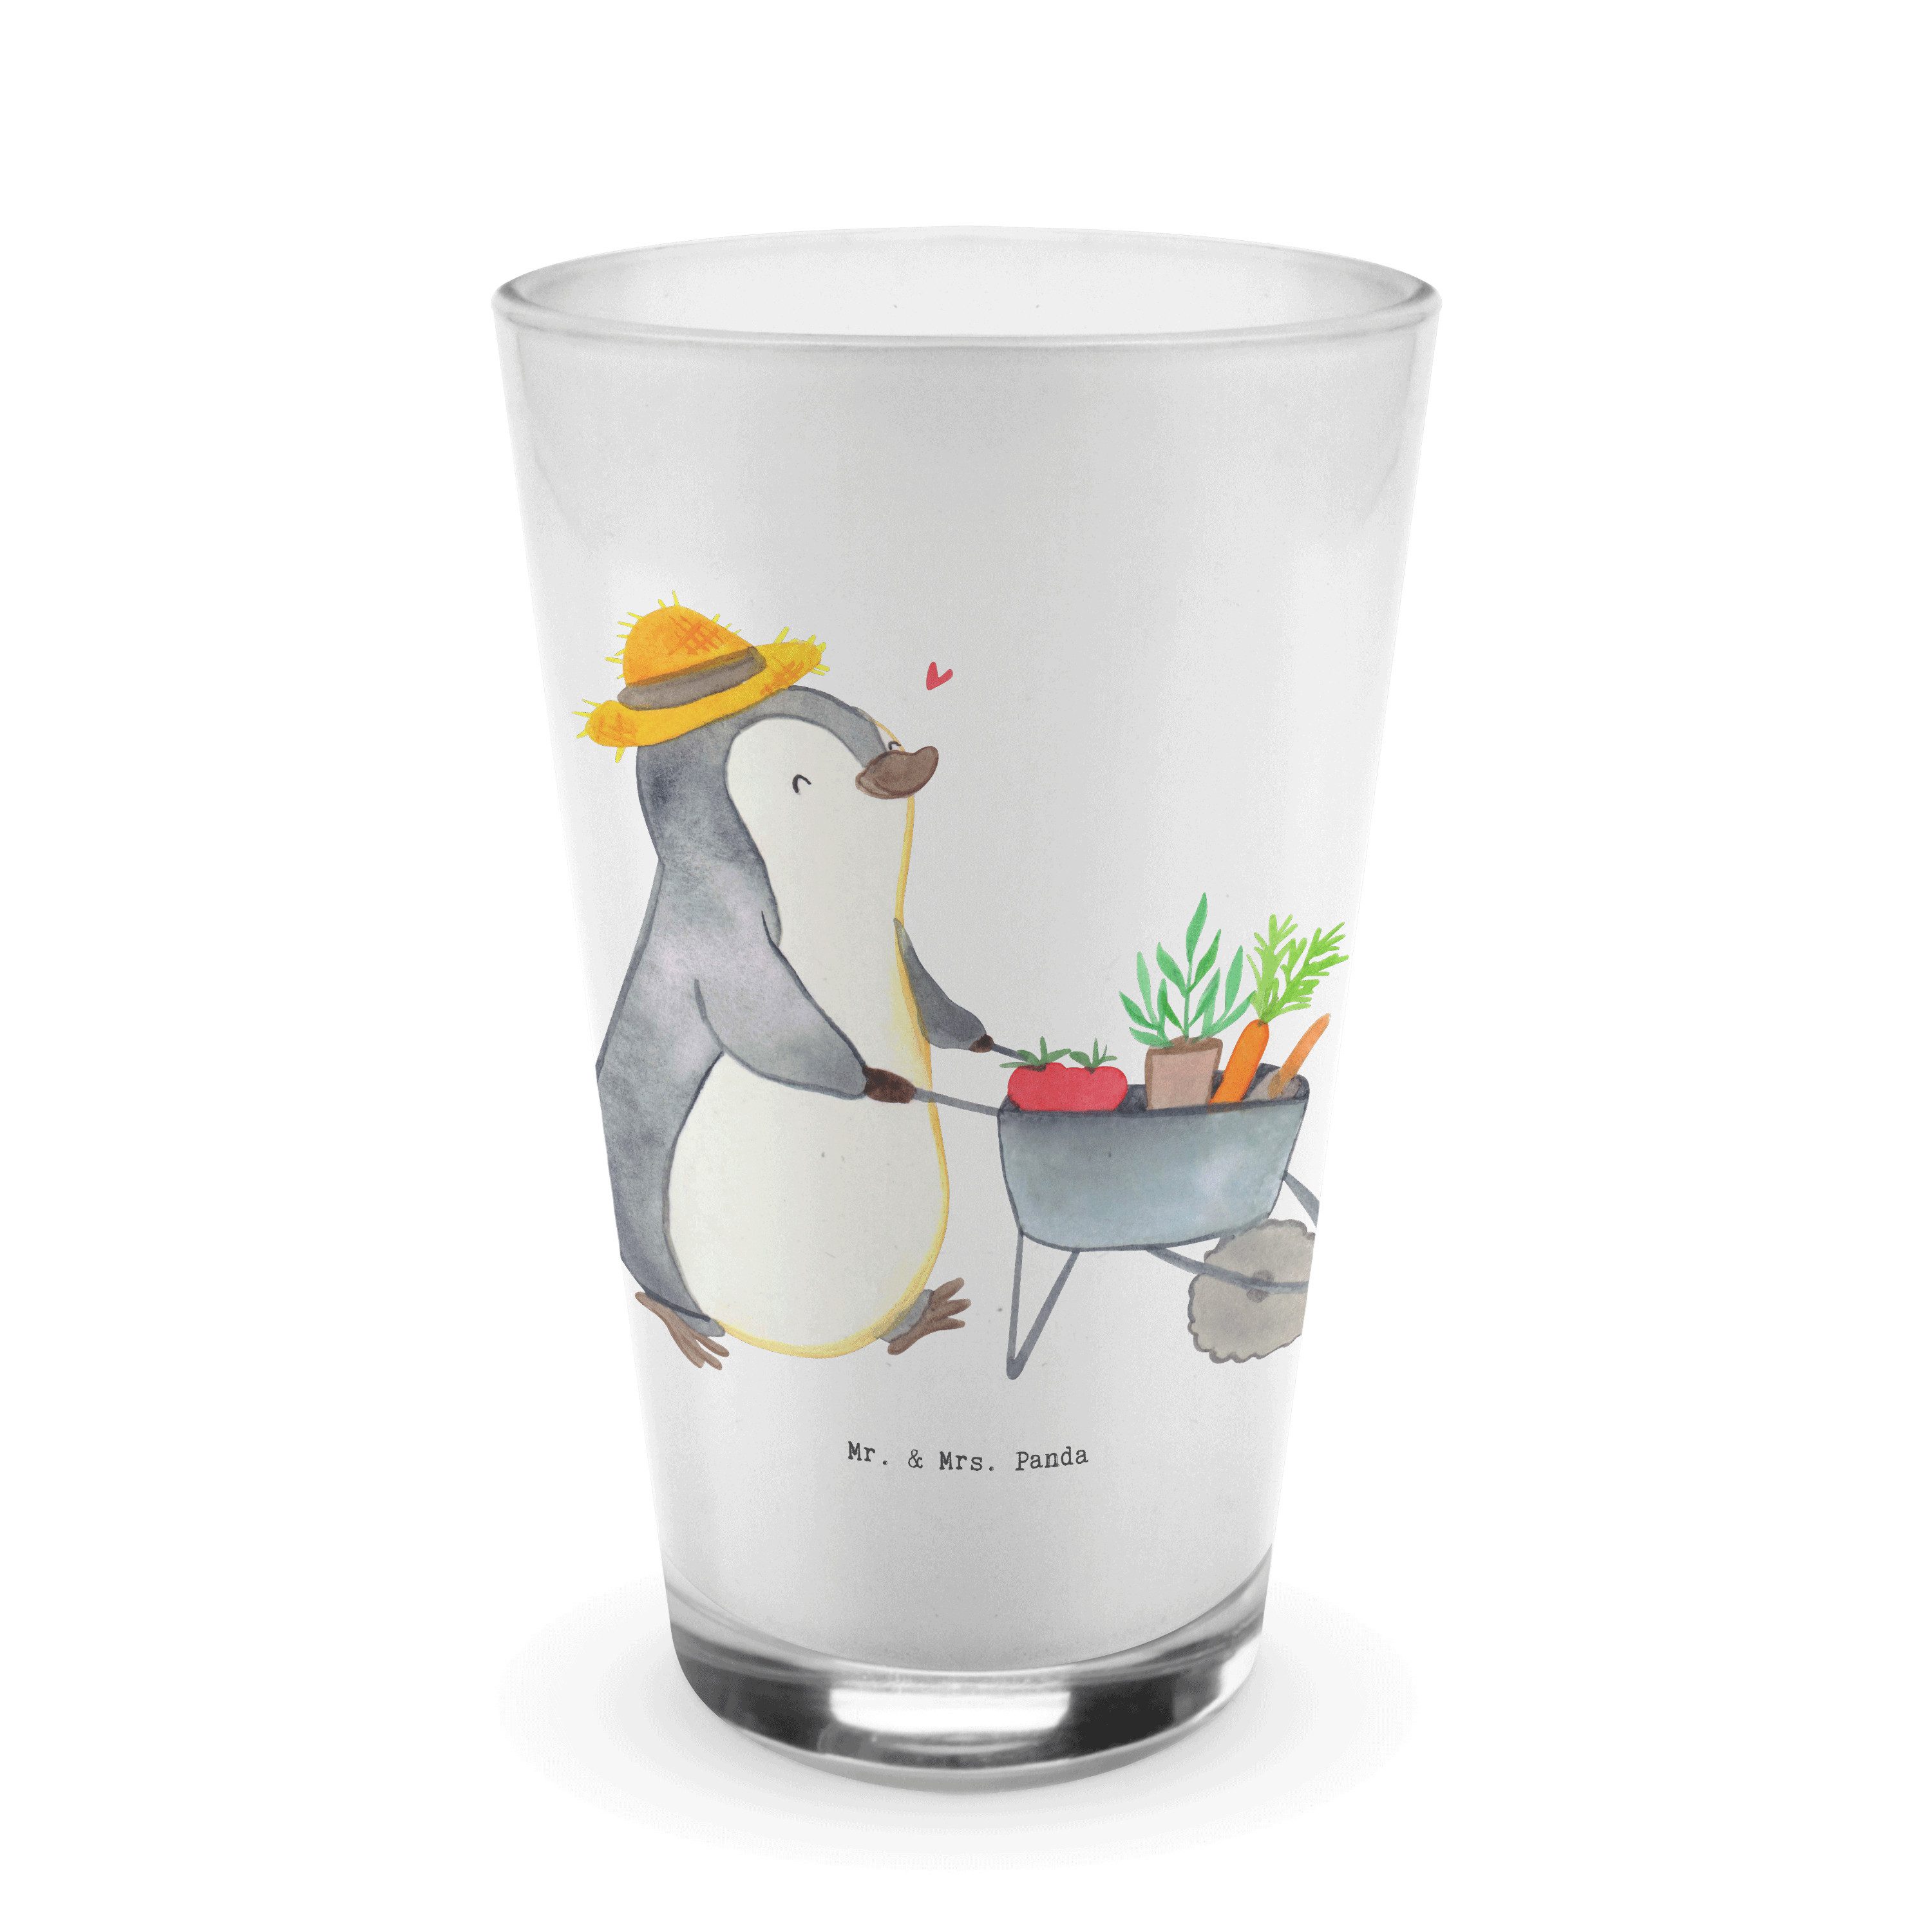 Mr. & Mrs. Panda Glas Pinguin Gartenarbeit - Transparent - Geschenk, Gartenpflege, Urban ga, Premium Glas, Edles Matt-Design